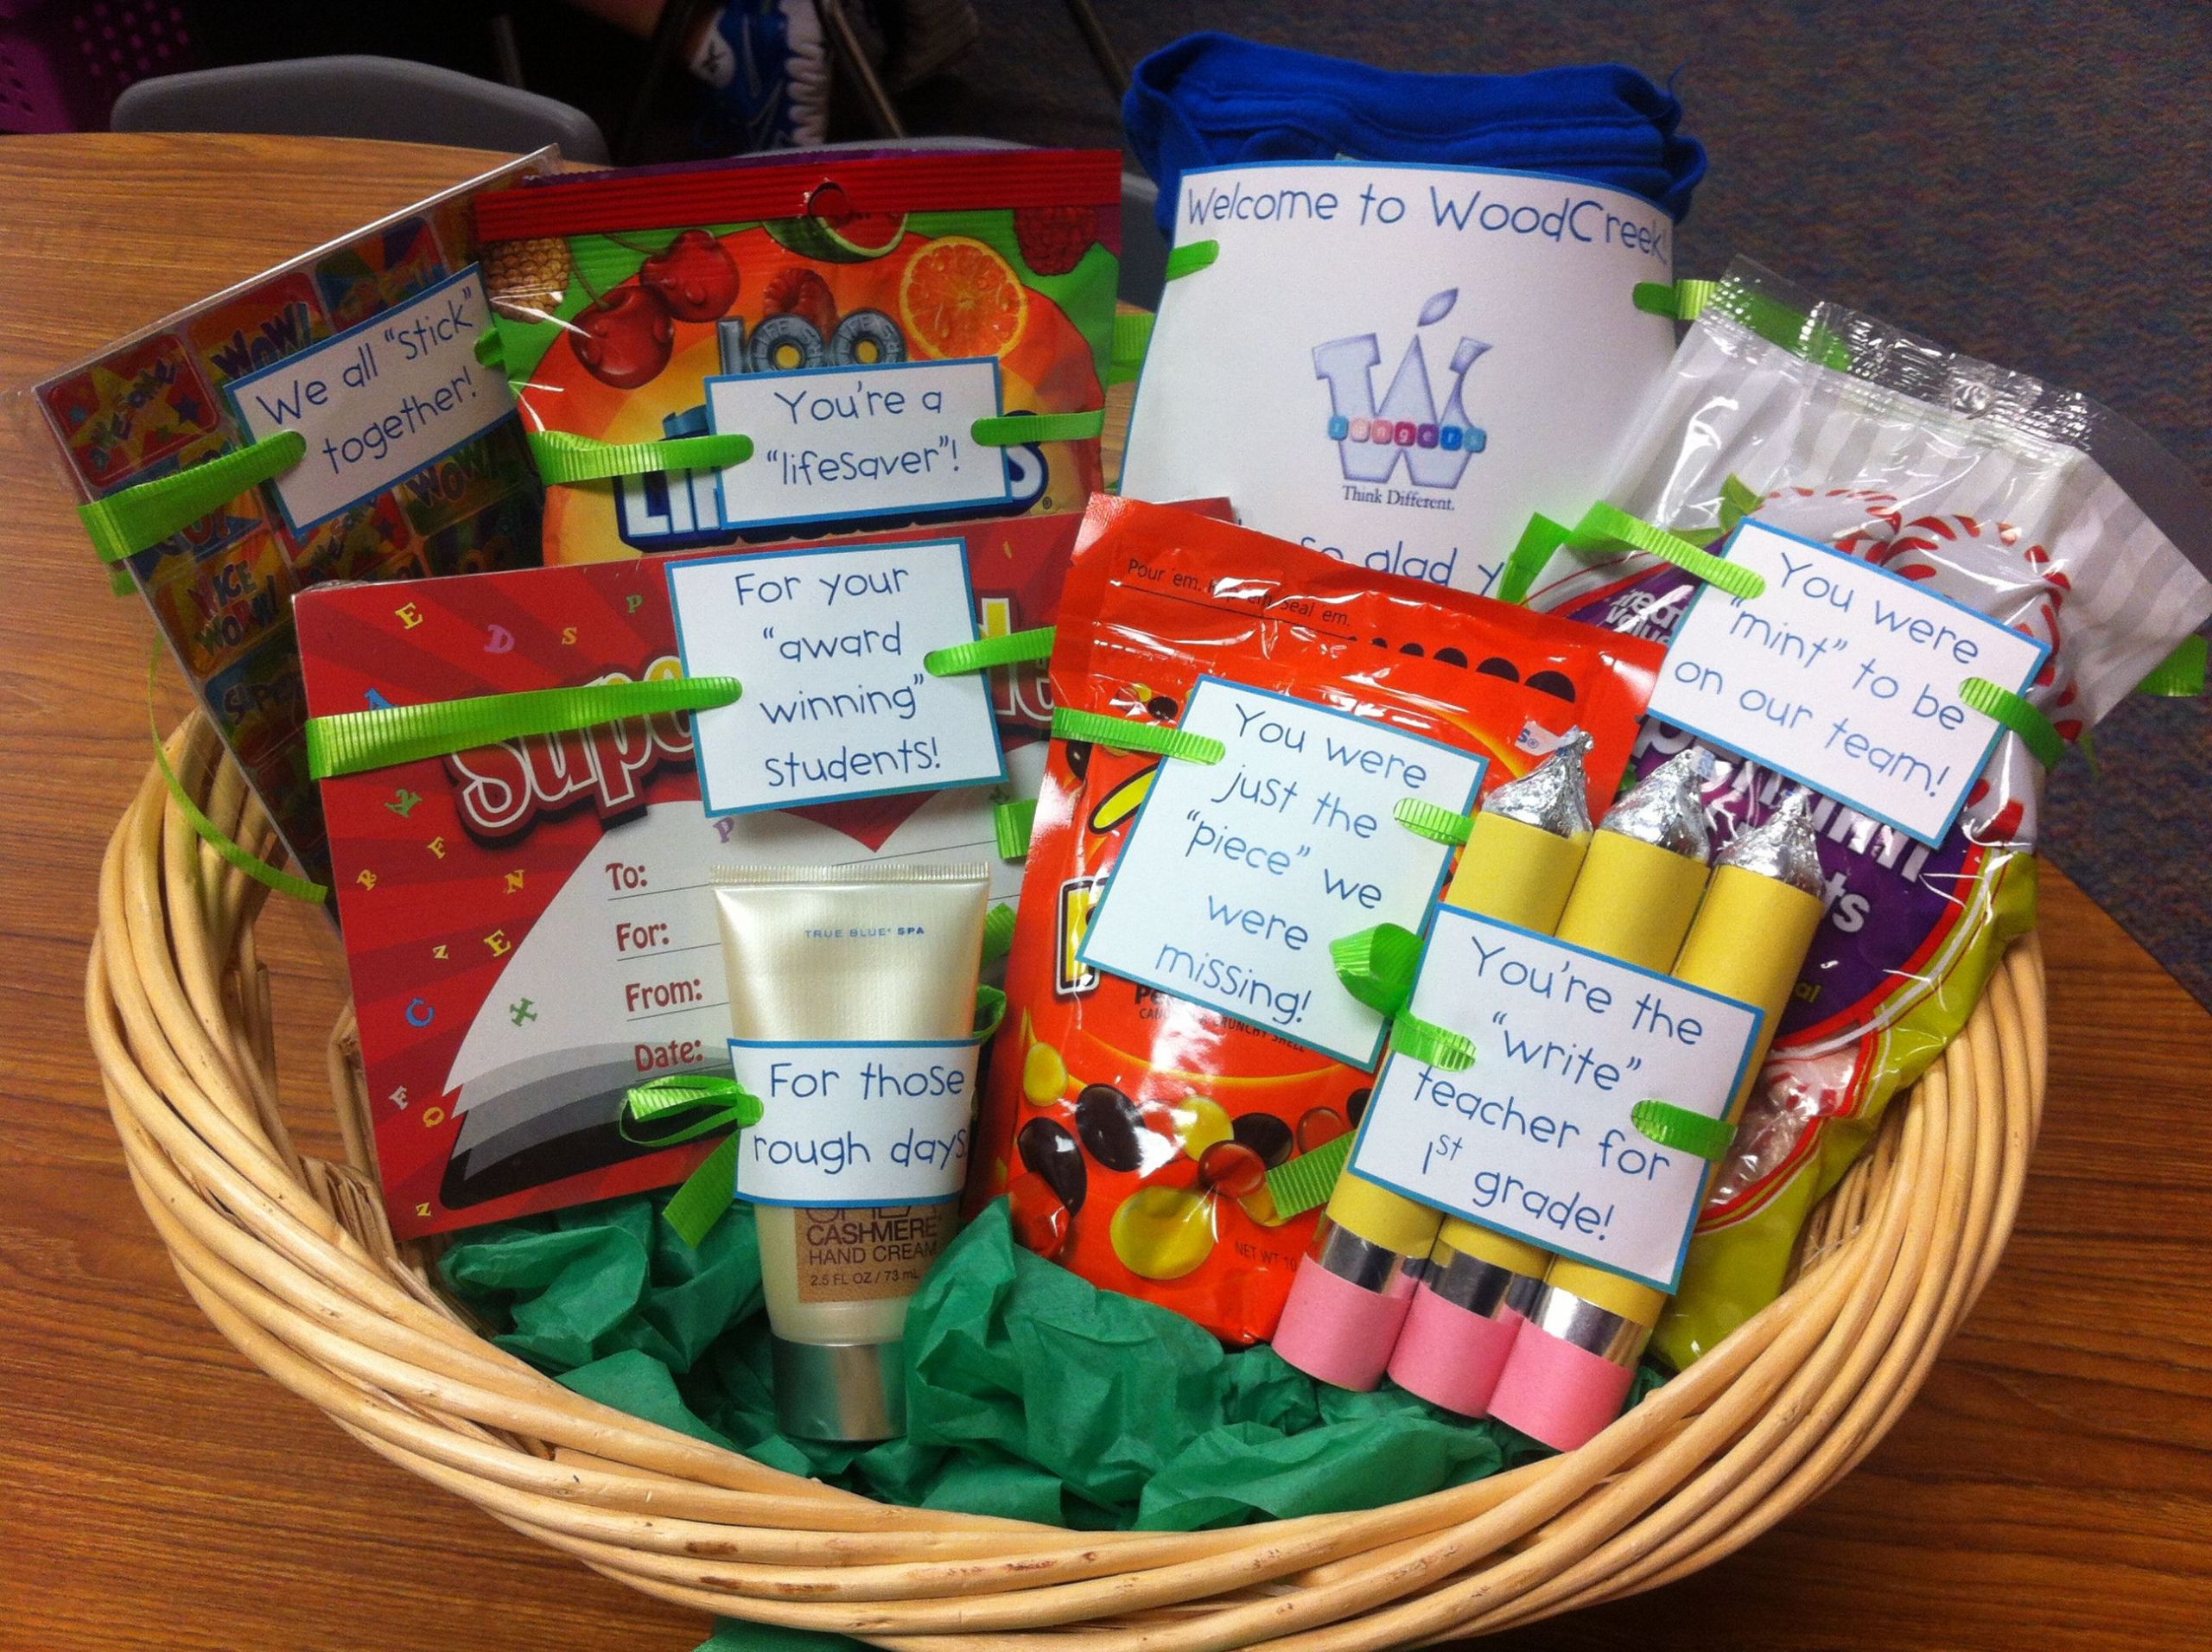 New Teacher Gift Basket Ideas
 Wel e to the team teacher t To cute what a GREAT